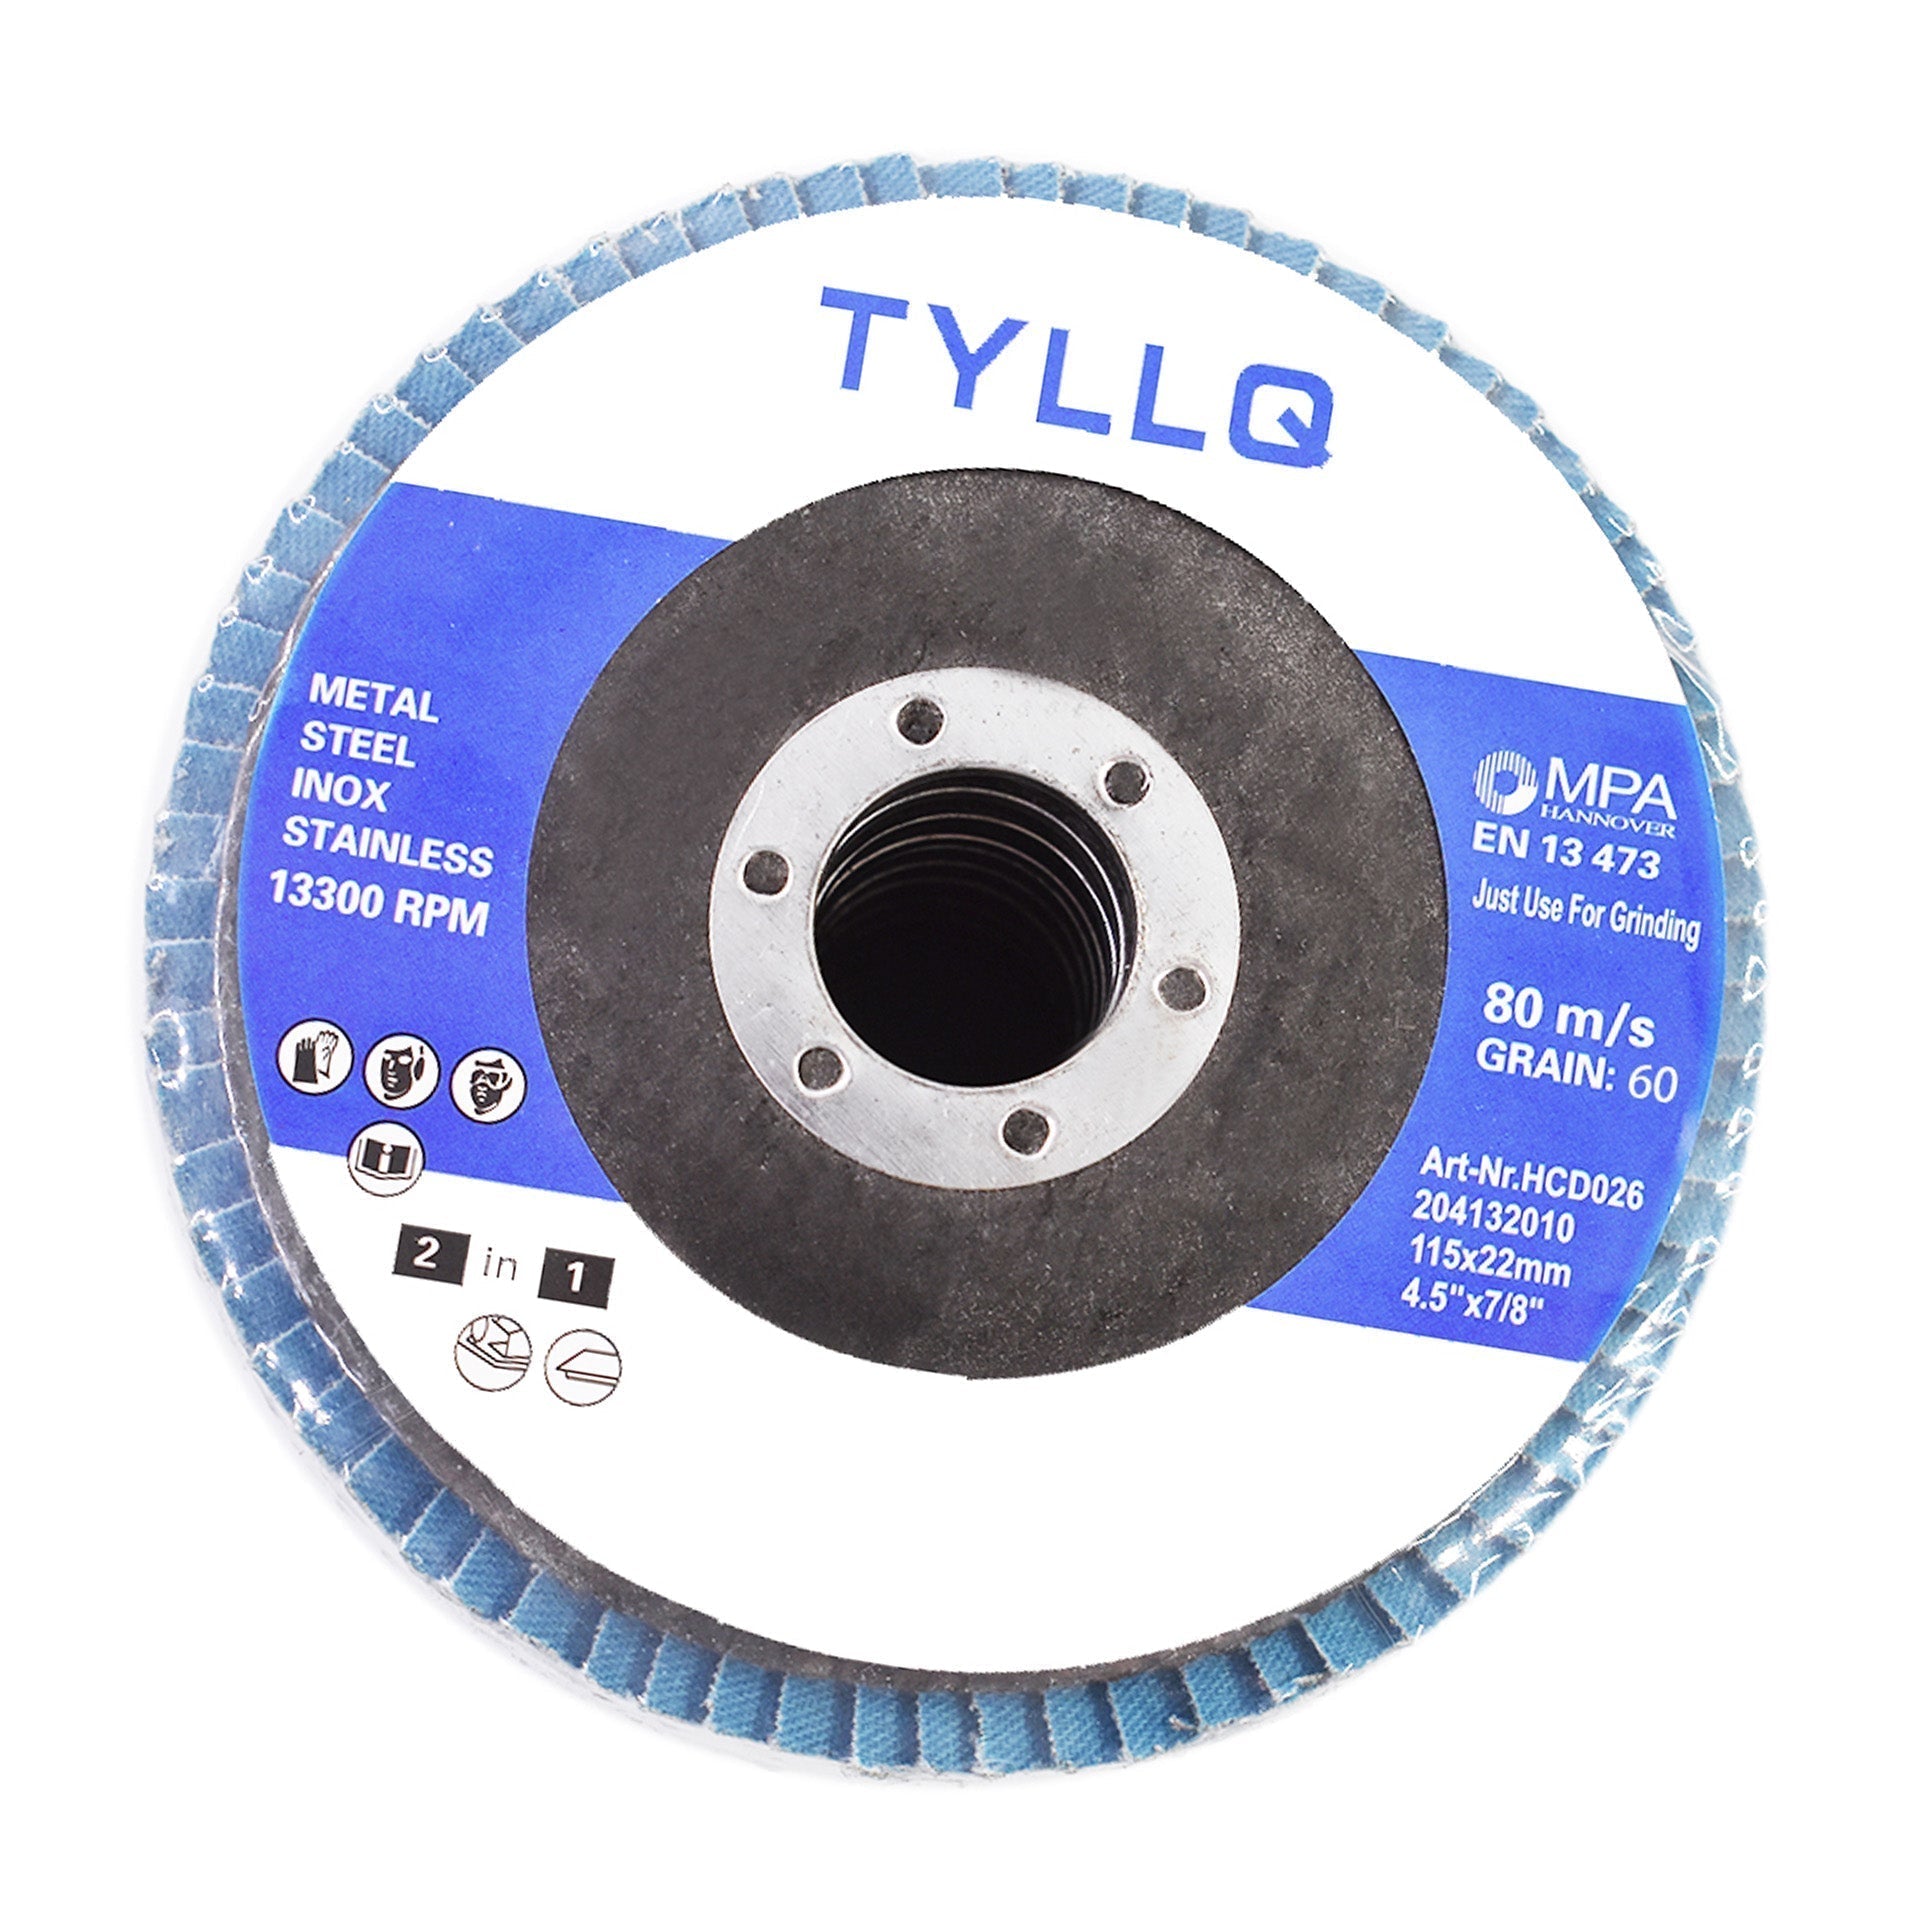 findmall 50 Pcs 4-1/2" X 7/8" 60 Grits Premium Zirconia Flap Discs Grinding Wheel Sandpaper Fit for Grinding FINDMALLPARTS